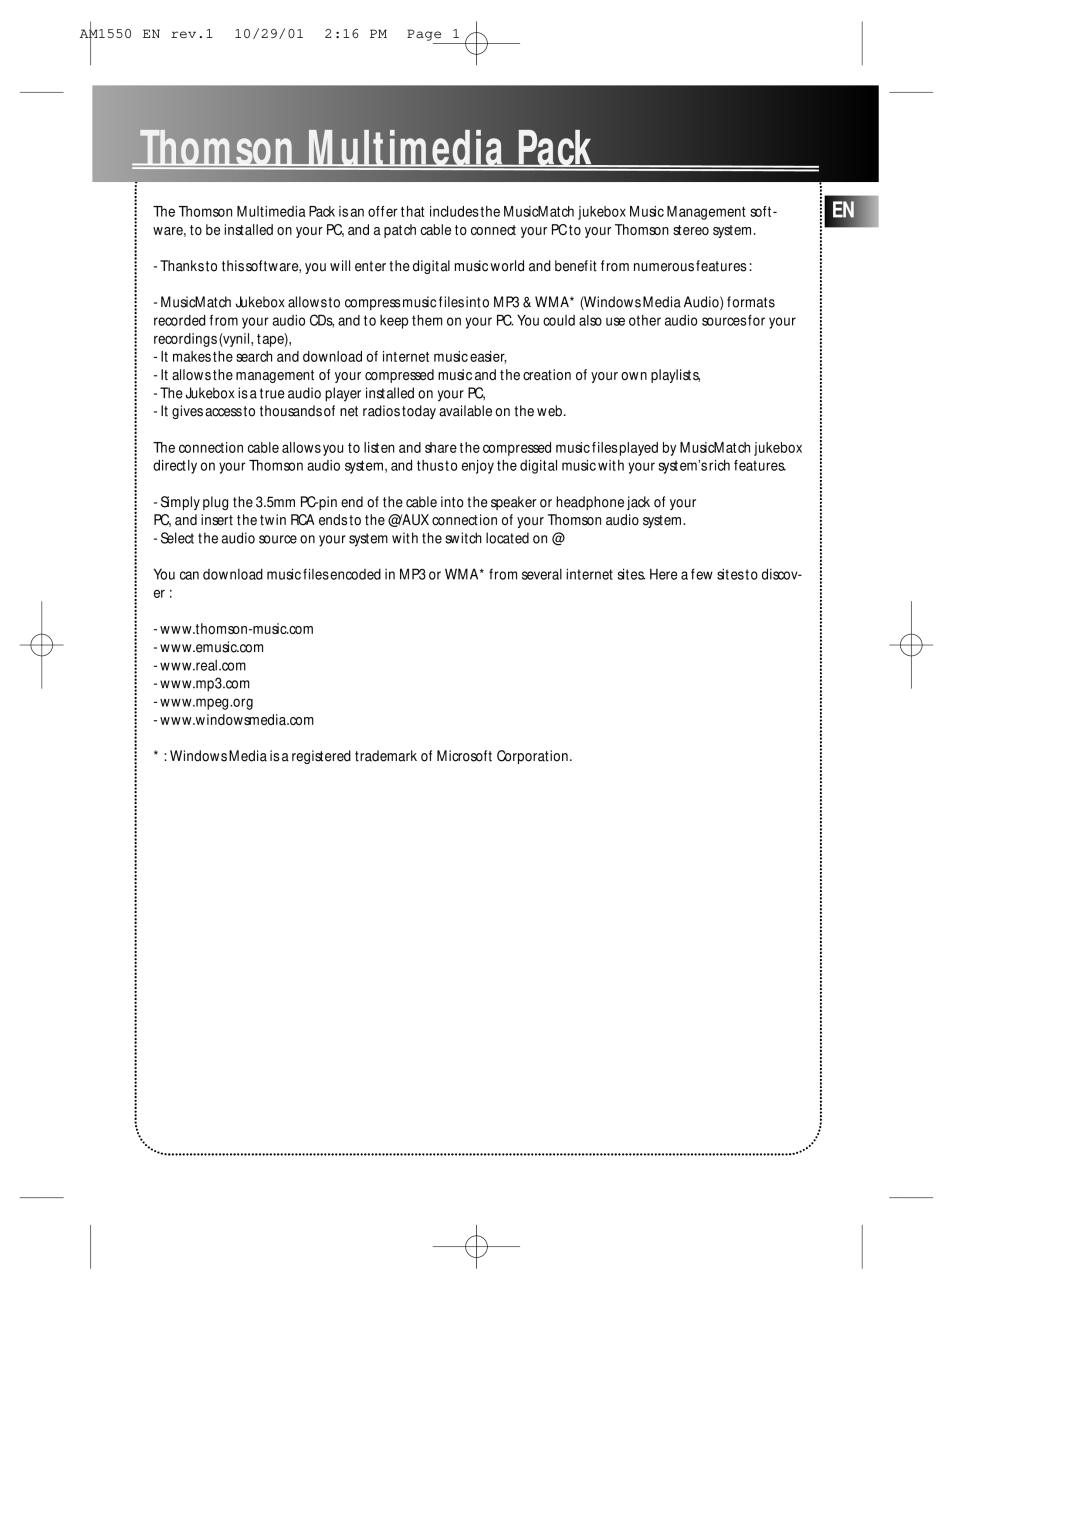 Technicolor - Thomson manual ThomsonMultimediaPack, AM1550 EN rev.1 10/29/01 2 16 PM Page 